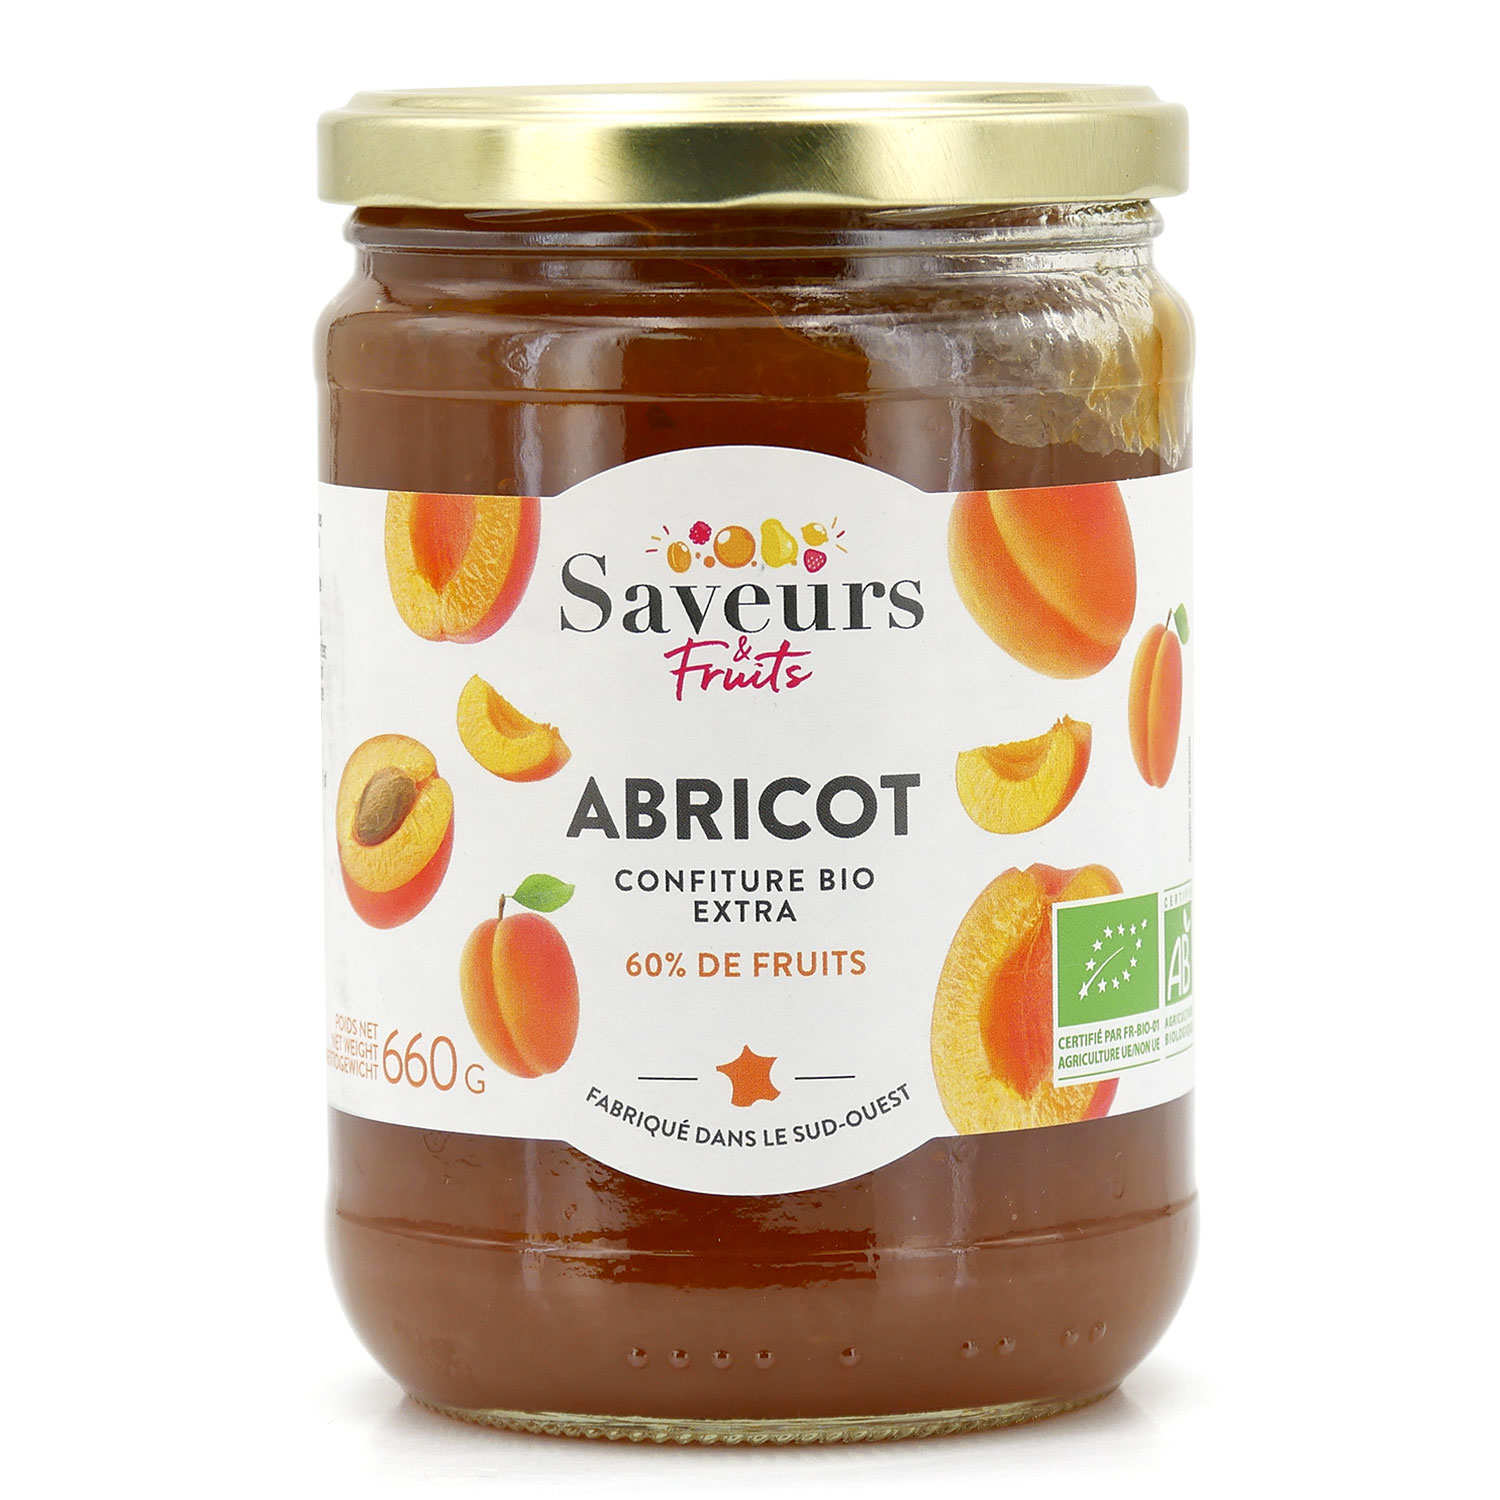 Extra organic apricot jam - Family size